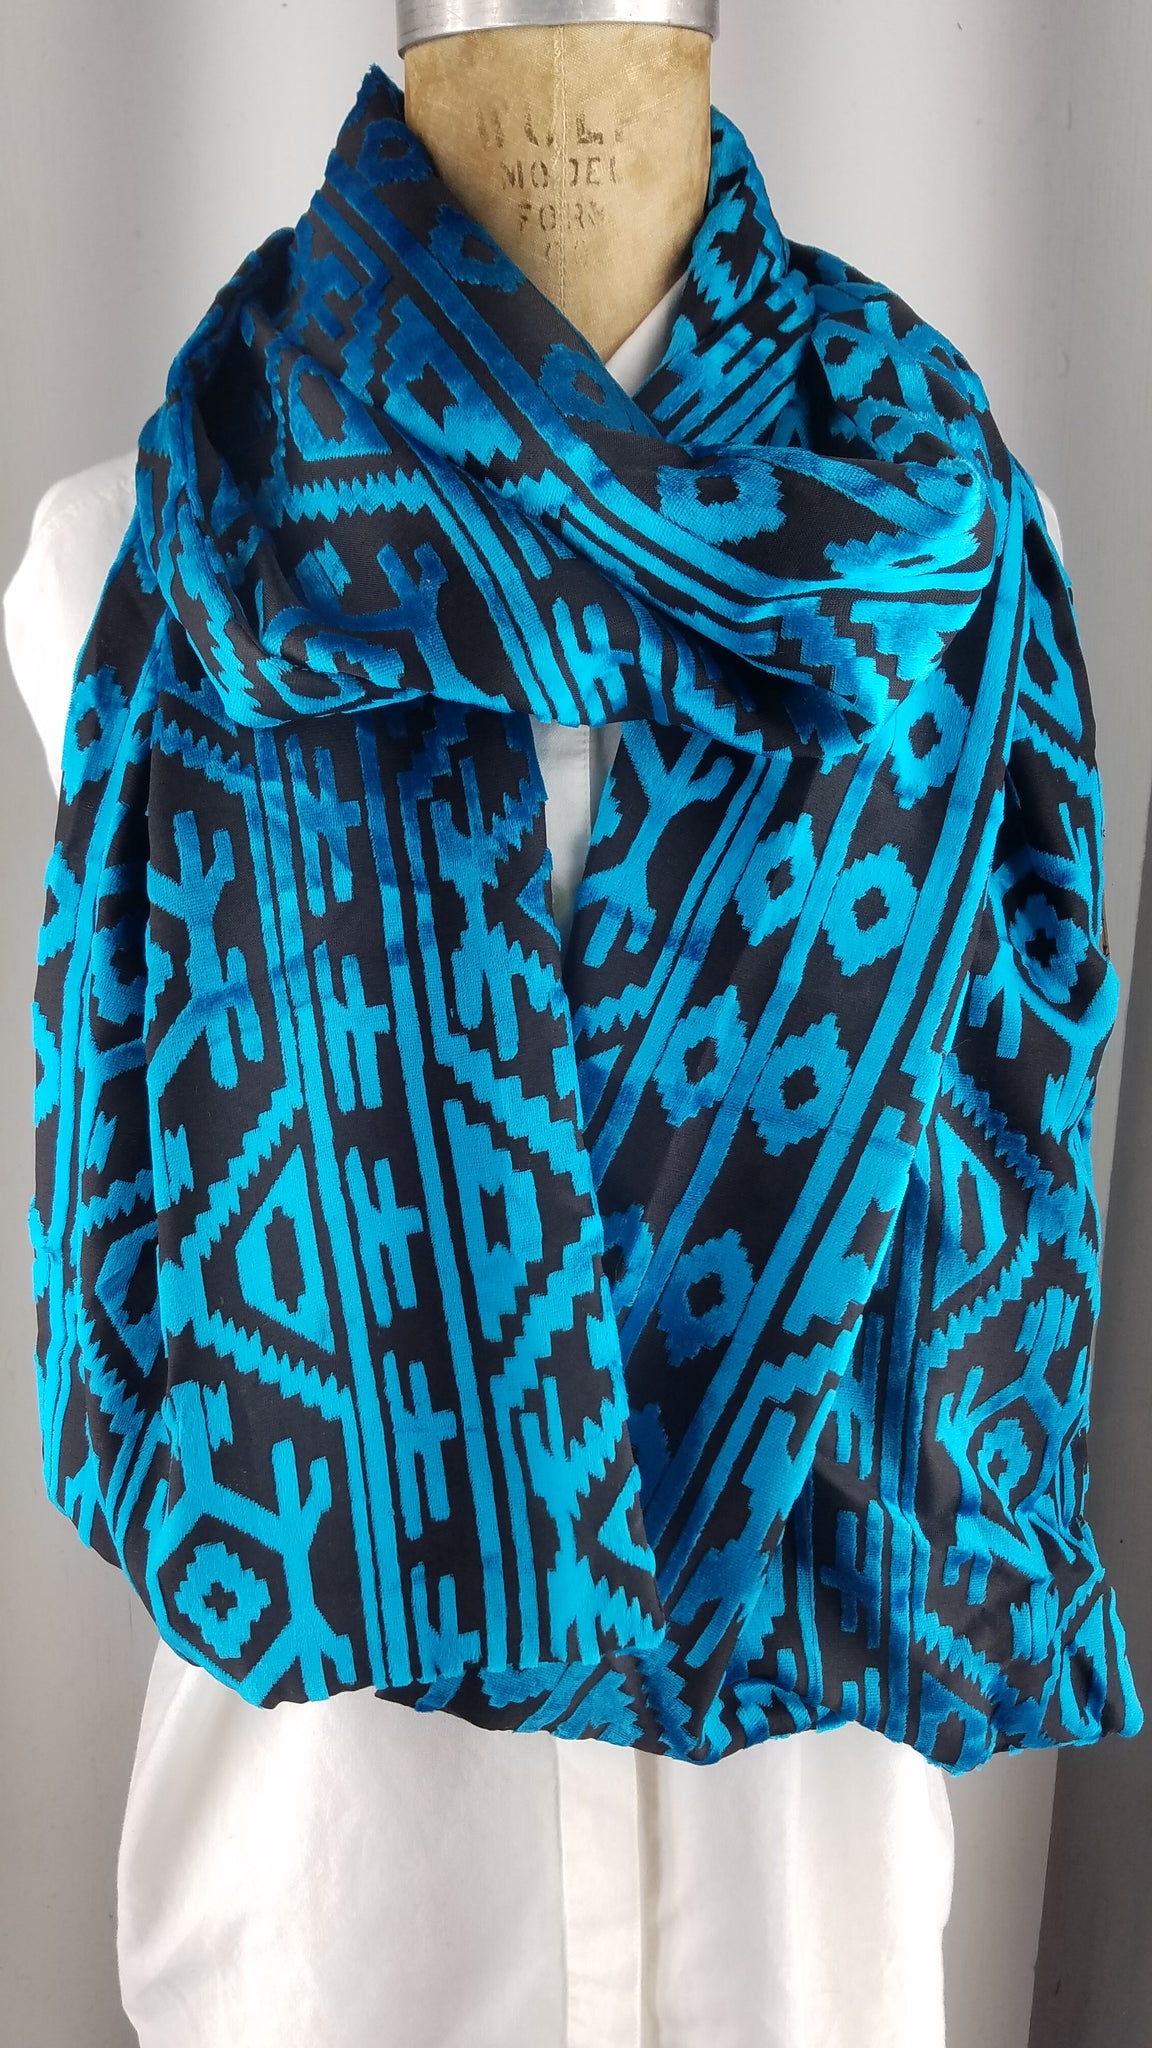 Cut silk velvet tribal print teal blue geometric patterns back to back